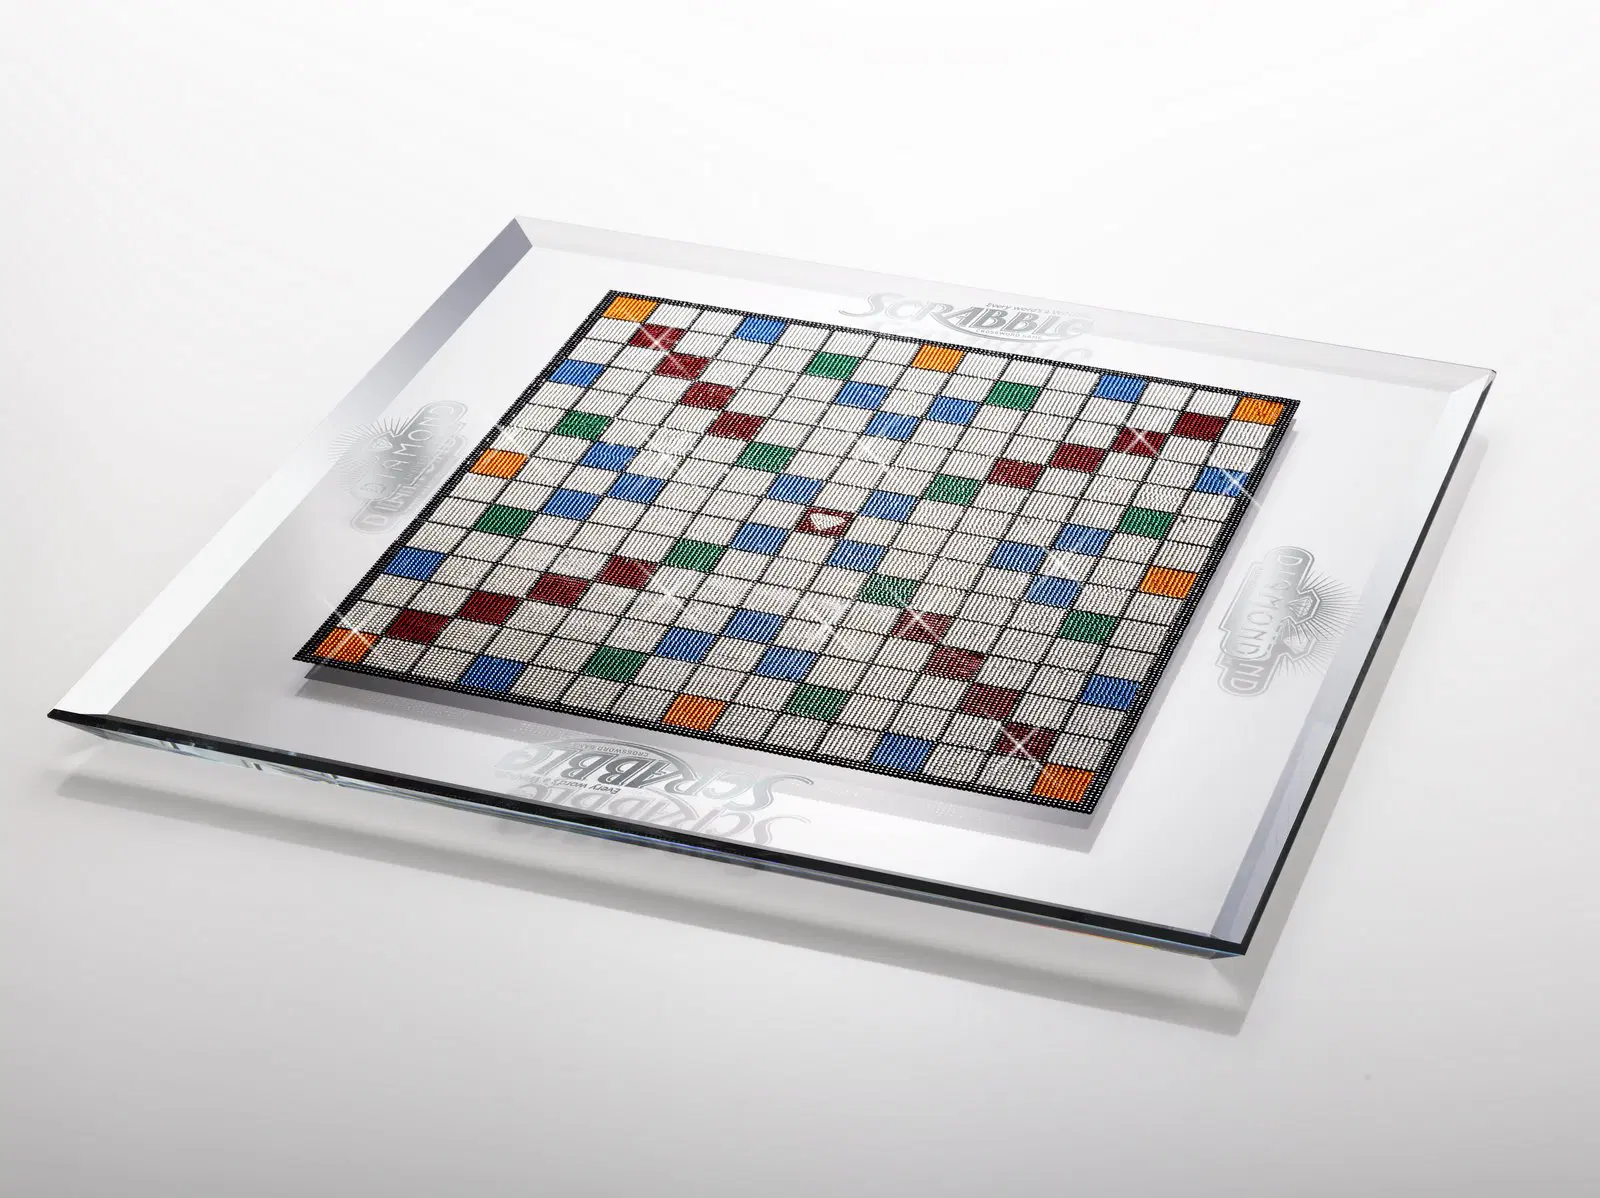 Swarovski Scrabble with a crystal-encrusted board